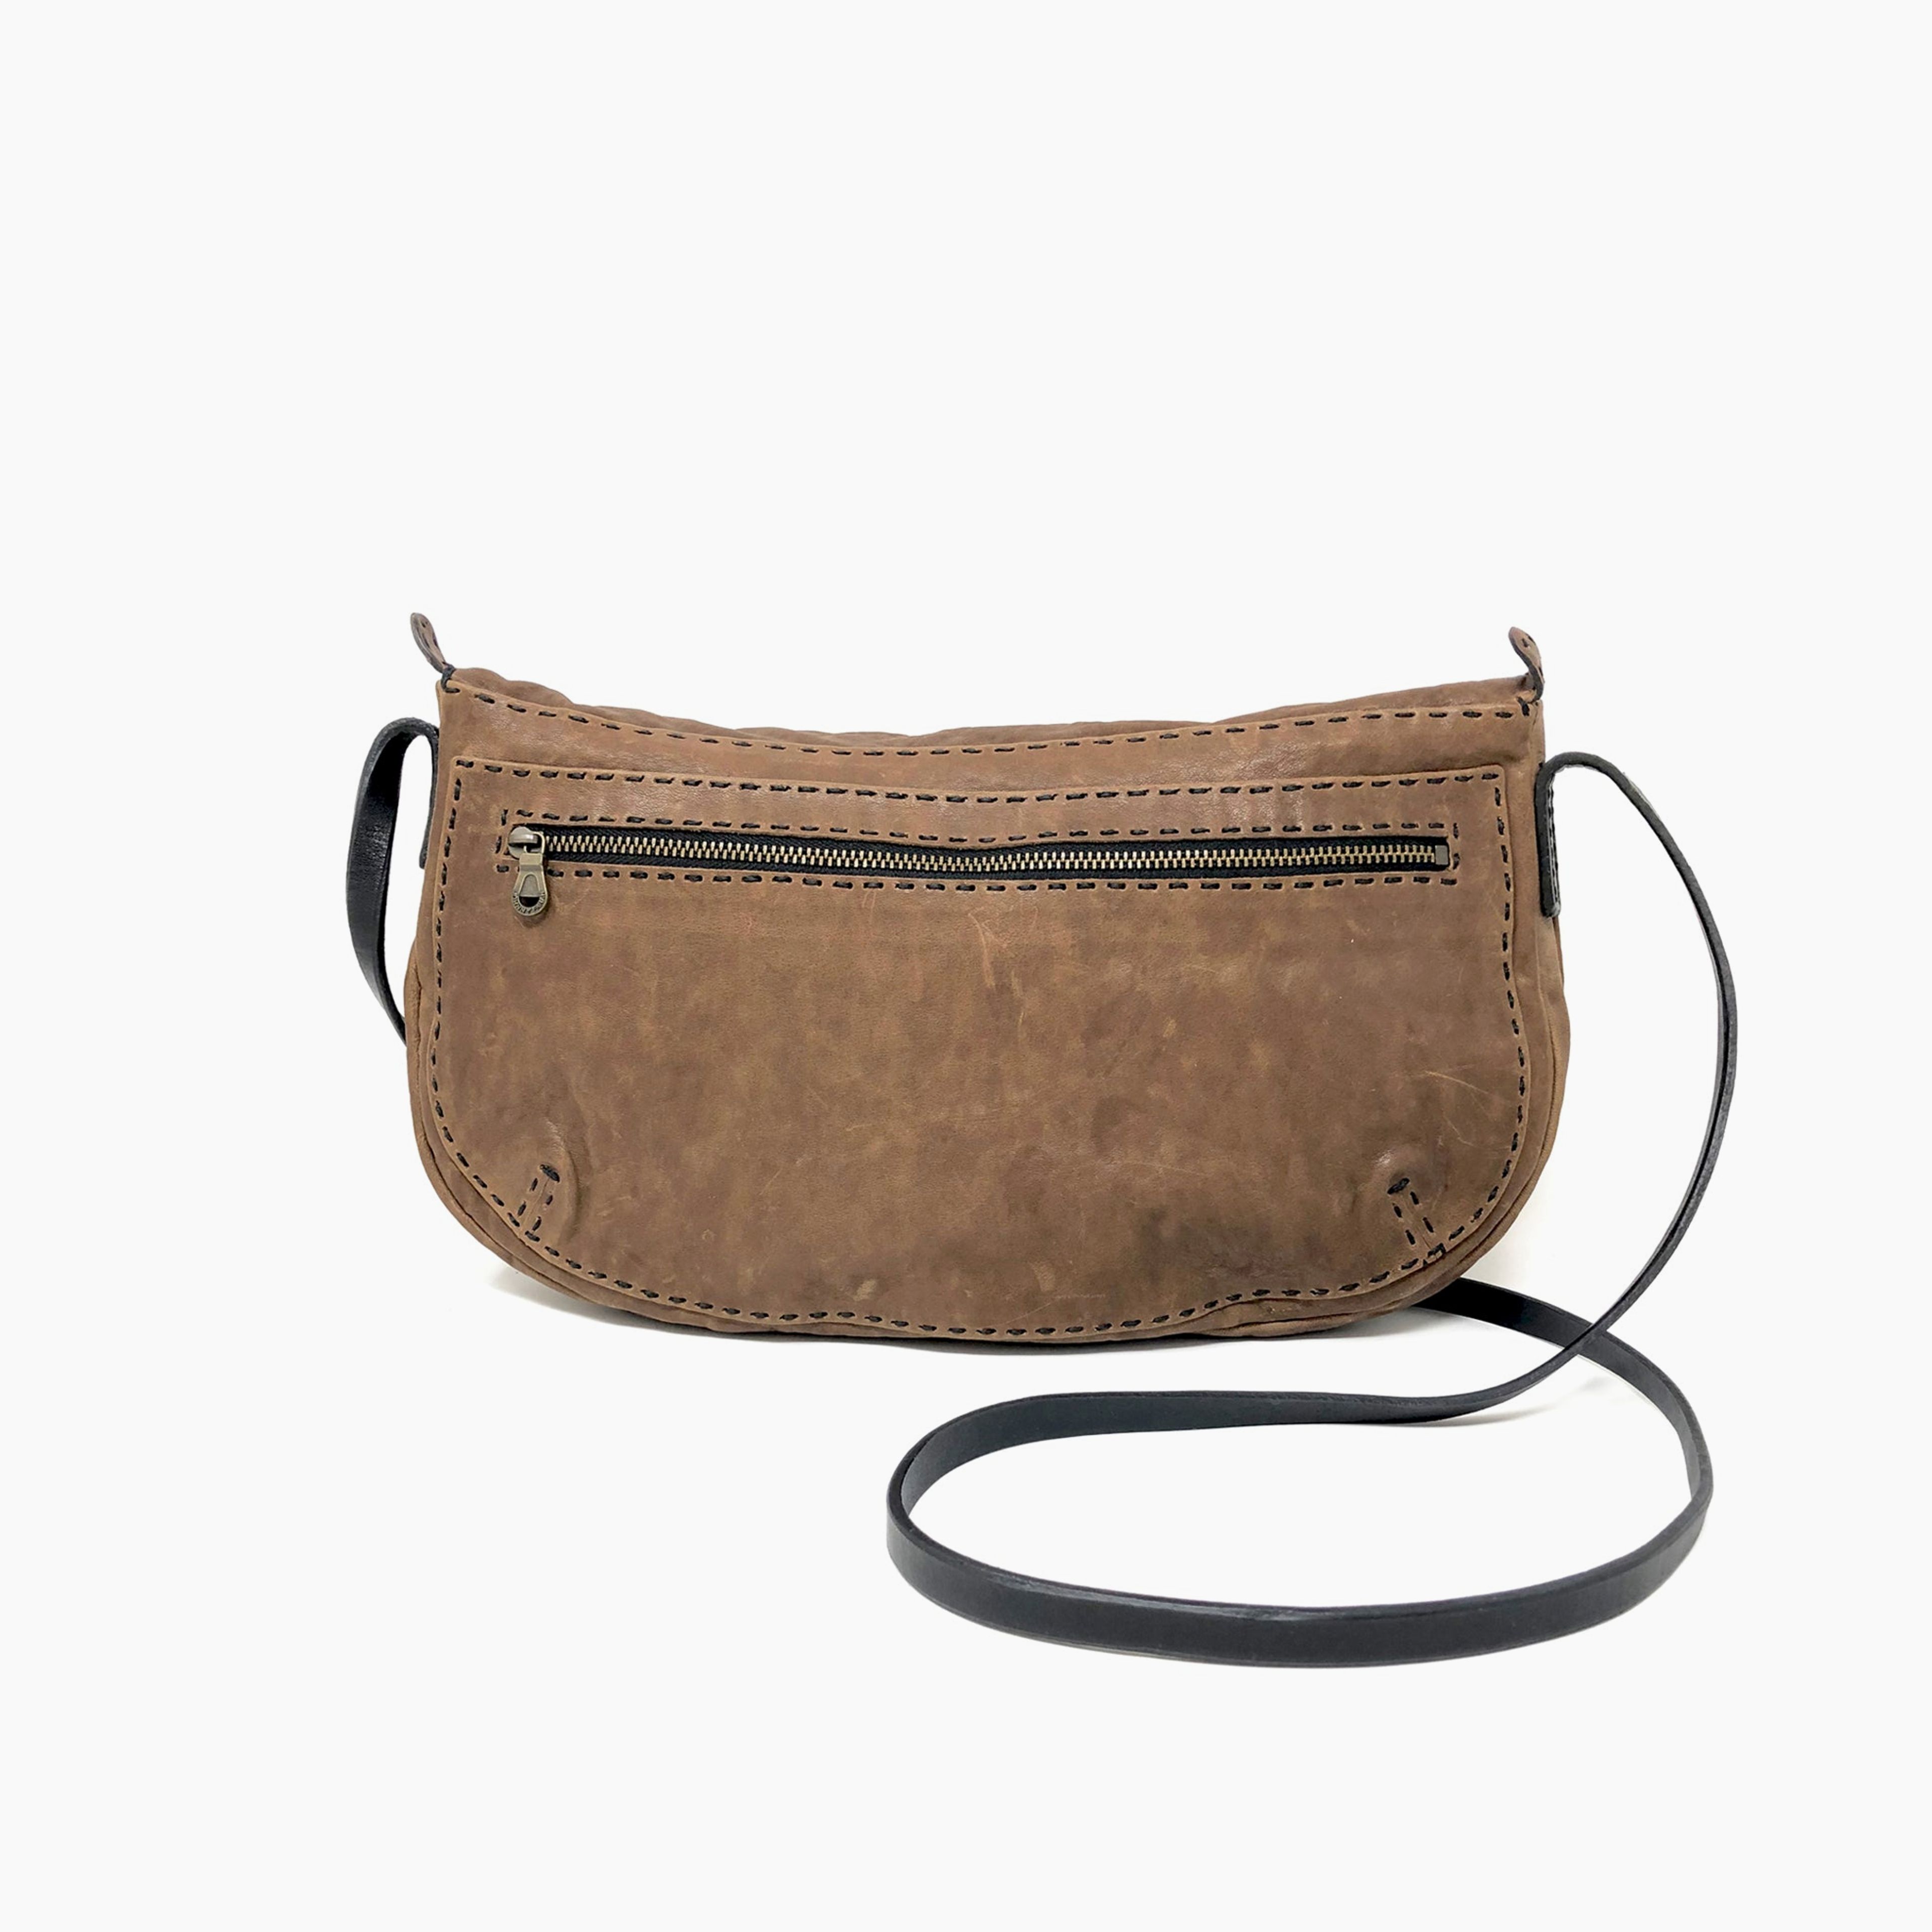 Alba - S Leather Bag